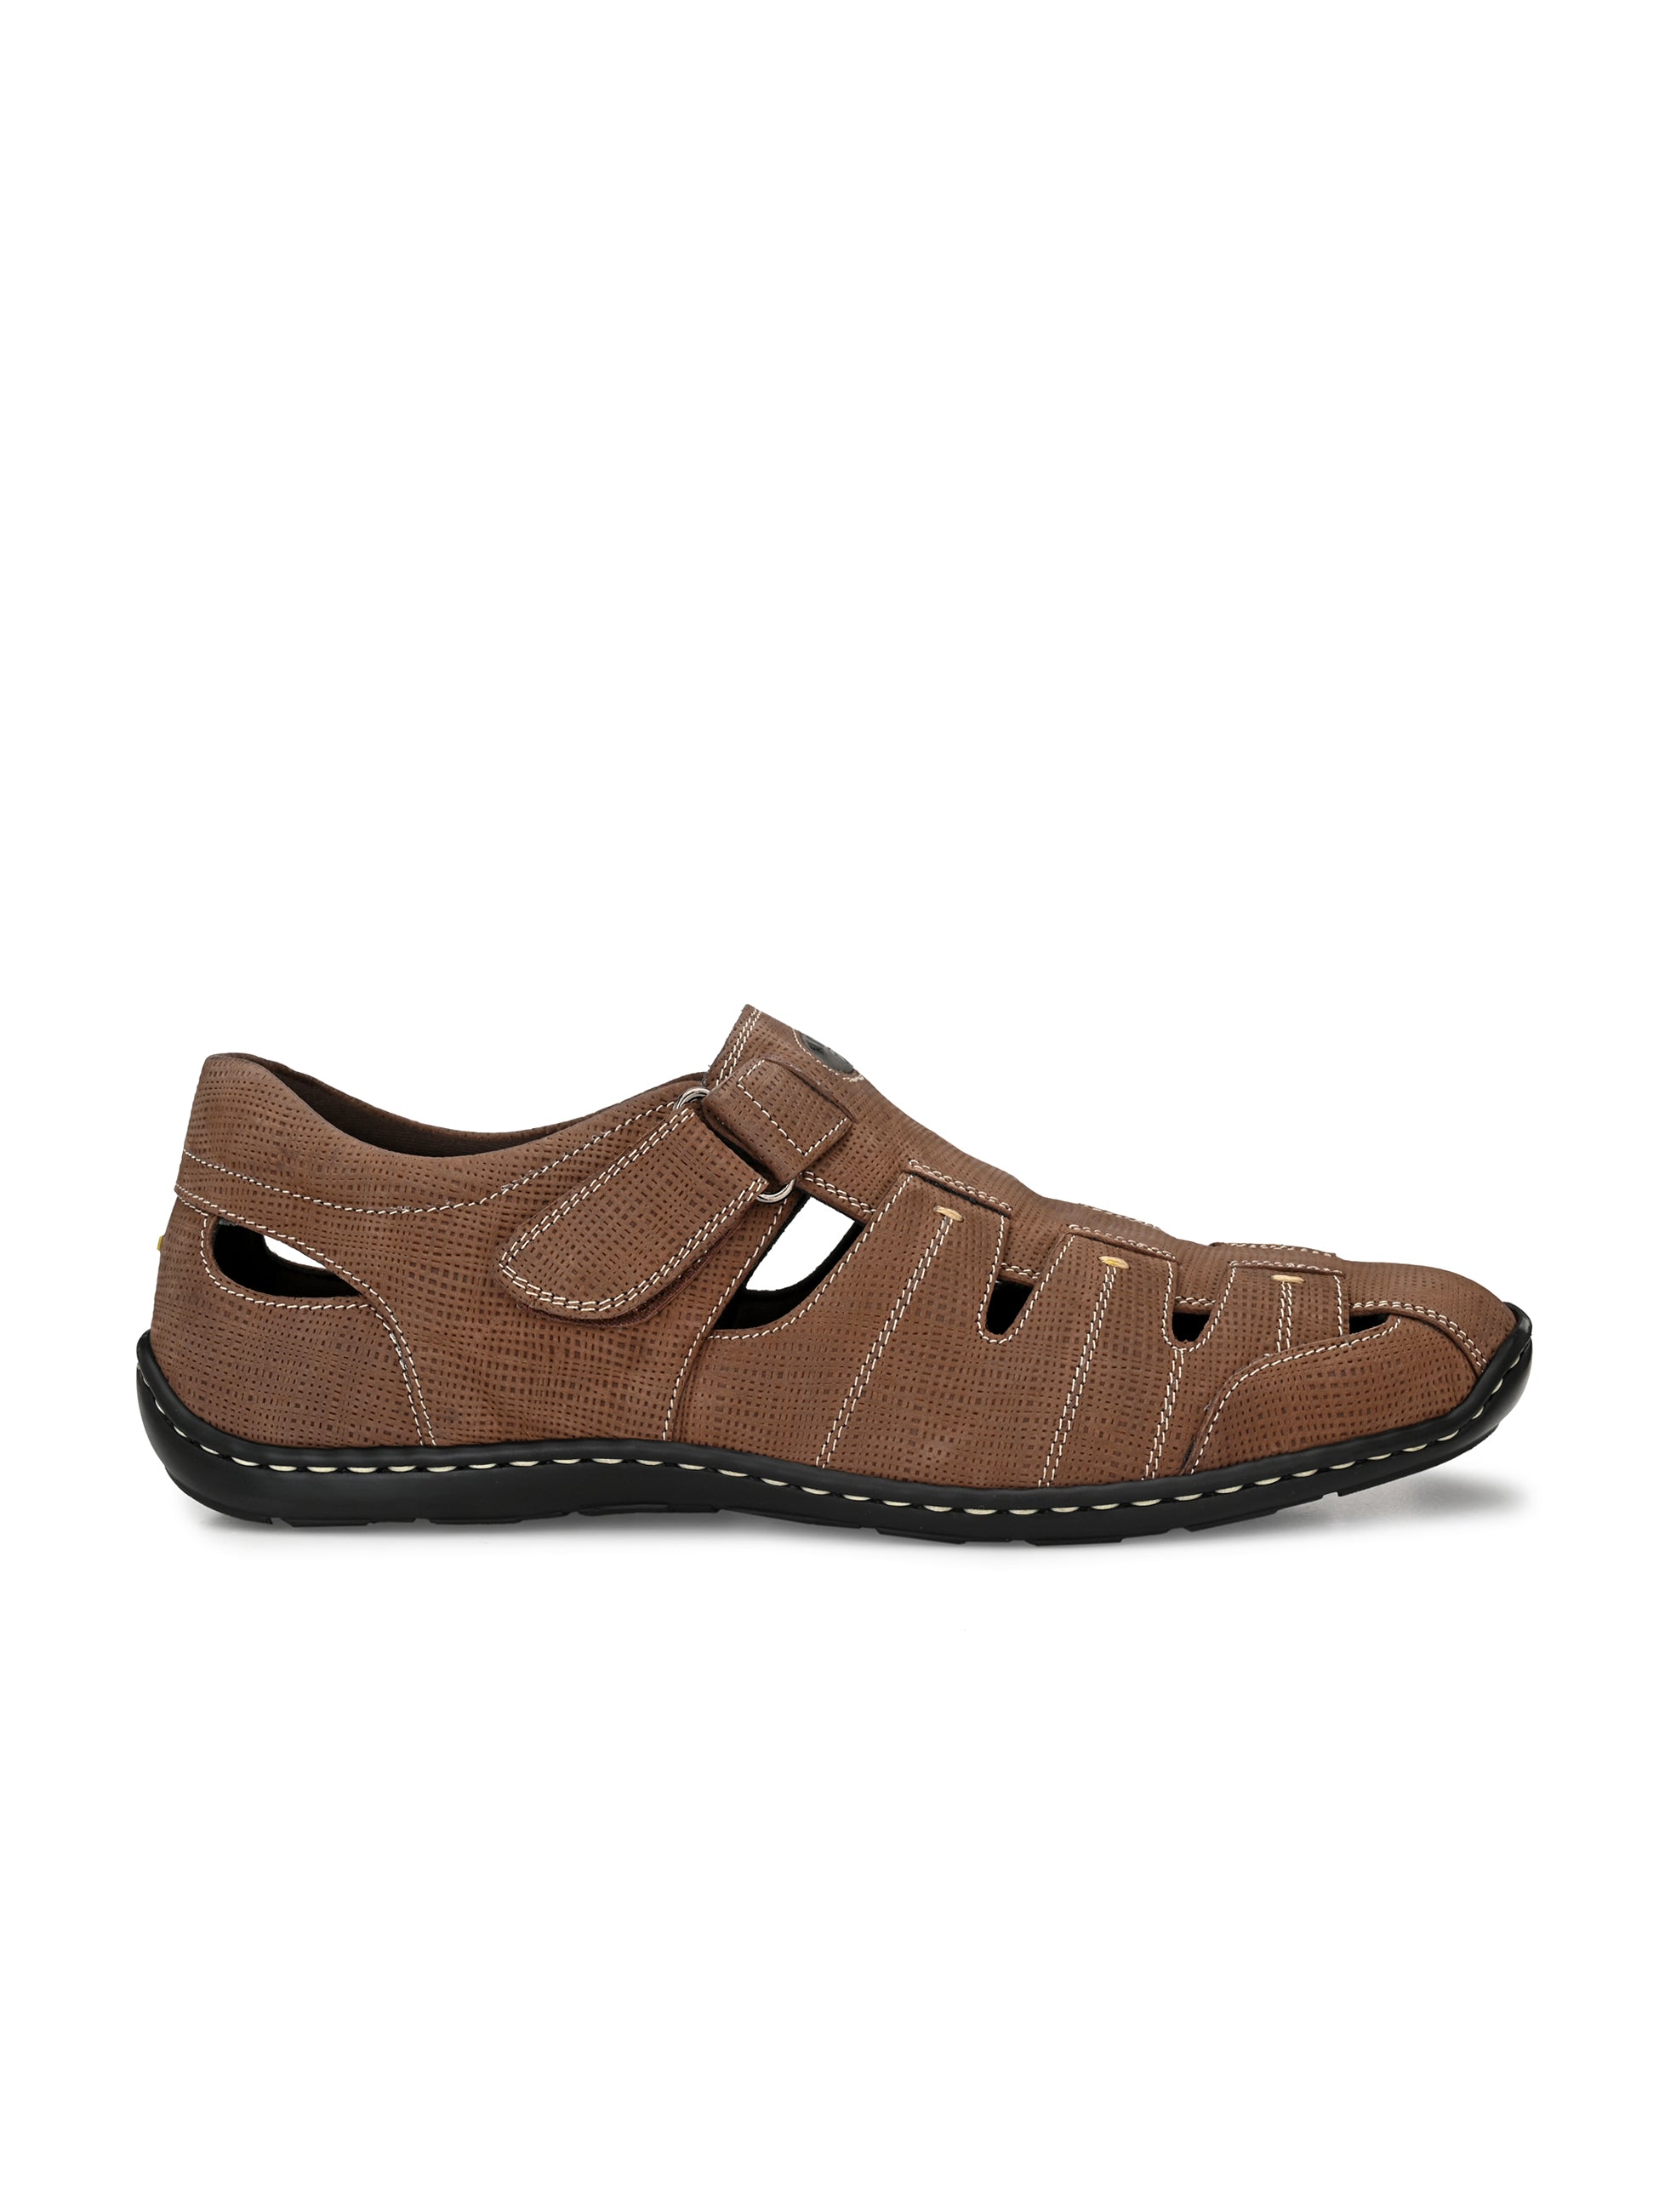 Hitz Brown Leather Shoe-Style Sandals for Men – Hitz Shoes Online